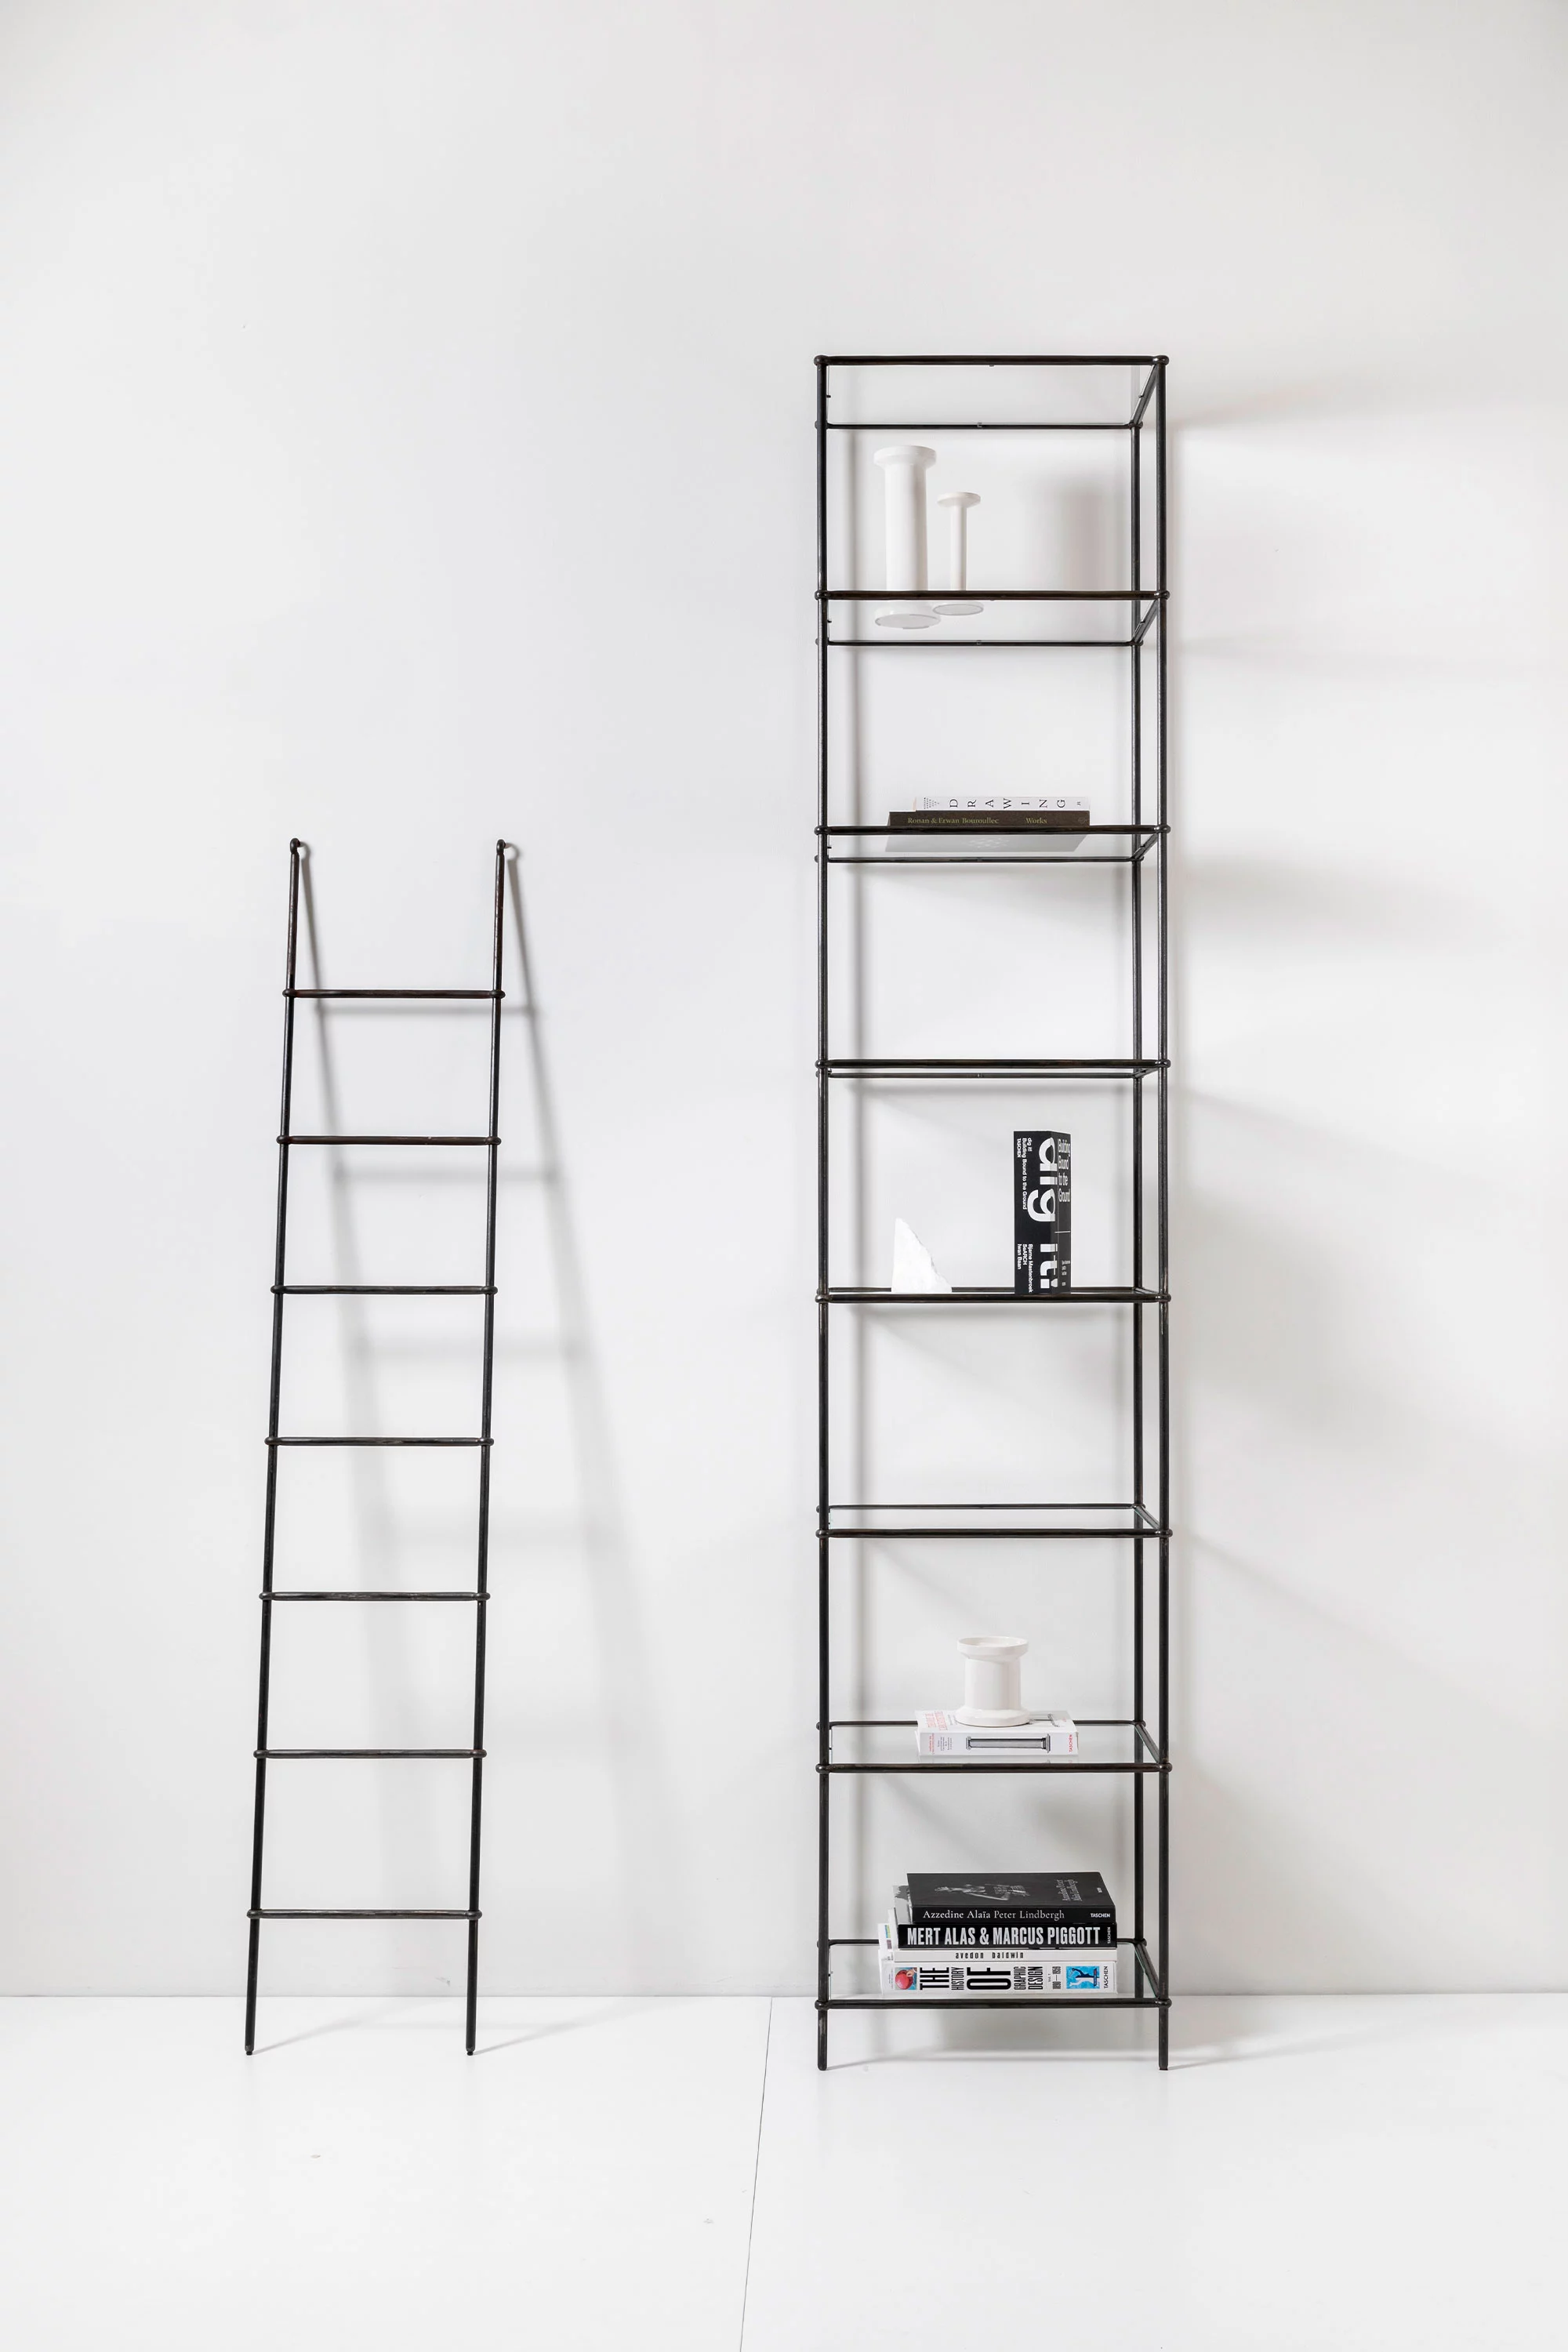 Ciel tower simple - Ronan & Erwan Bouroullec - Miscellaneous - Galerie kreo